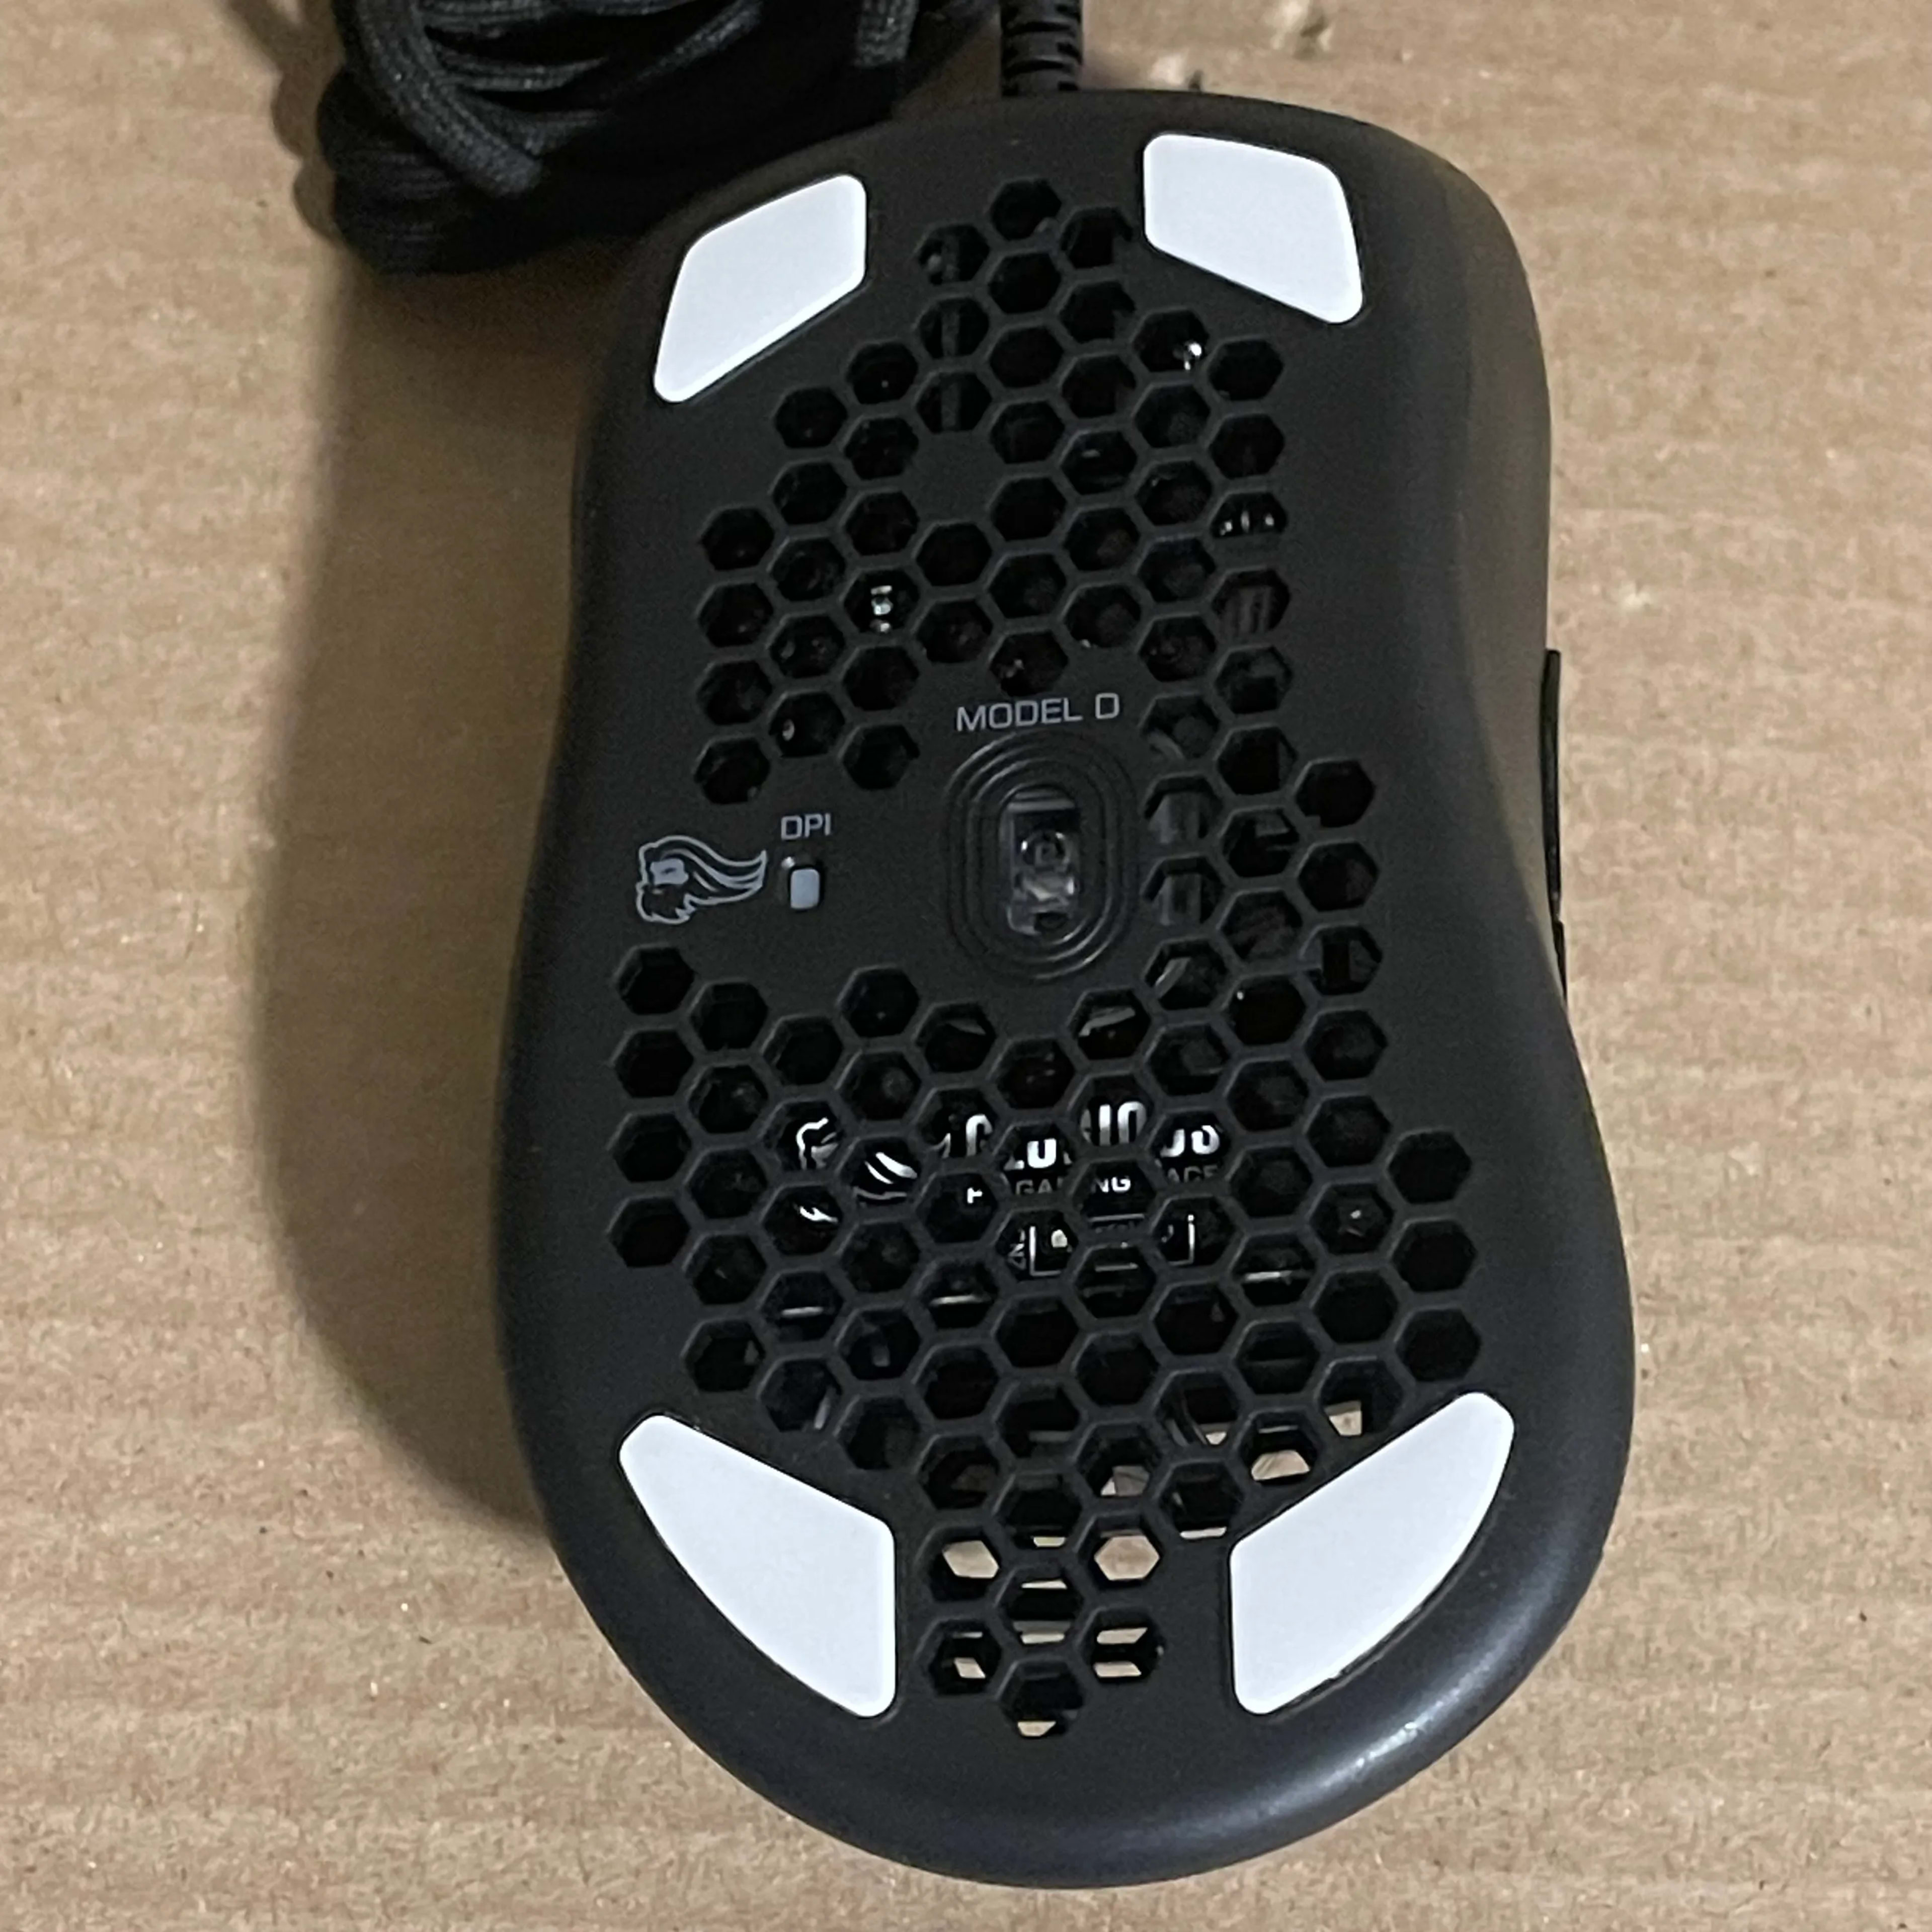 Glorious Model D Matte Black Gaming Mouse